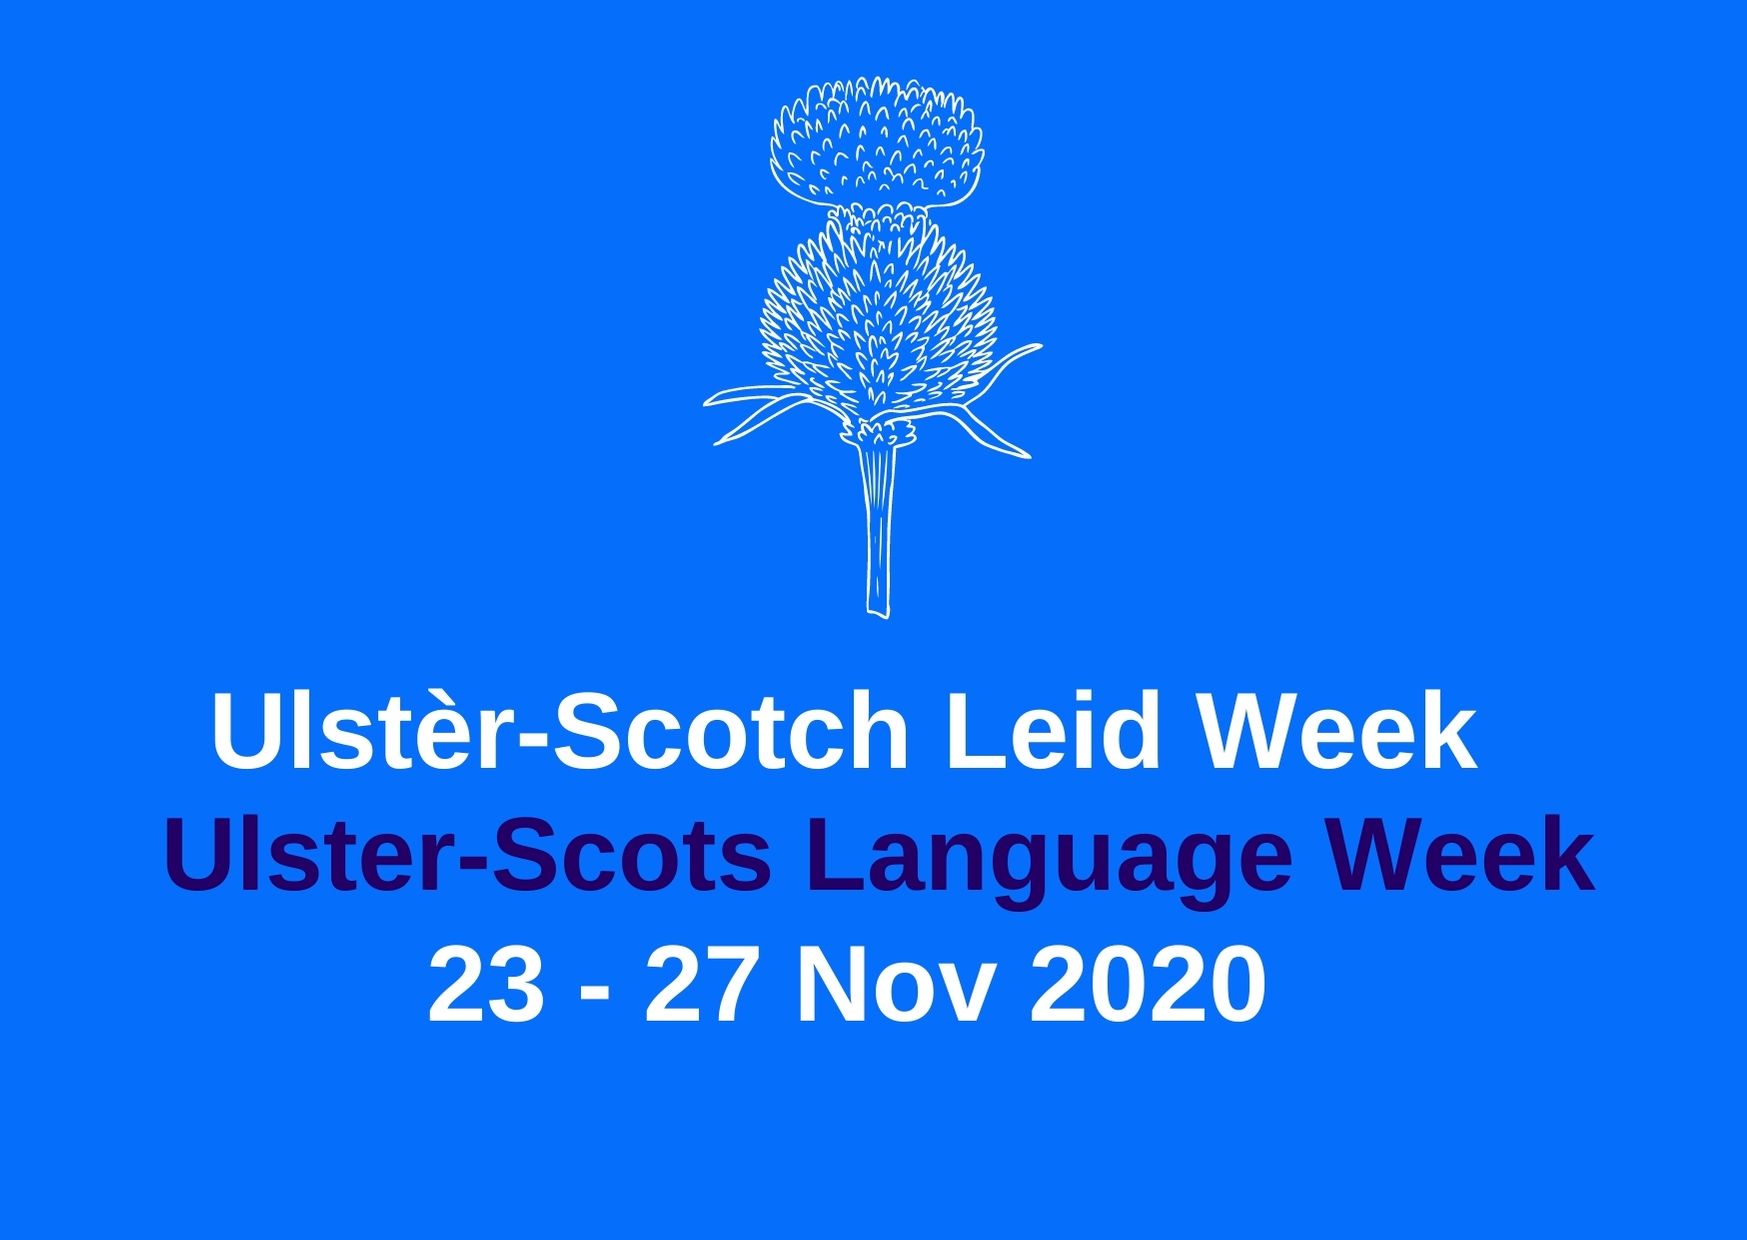 Celebrate Ulstèr-Scotch Leid Week (Ulster-Scots Language Week) running 23-27 Nov 2020 with ISLAND Arts